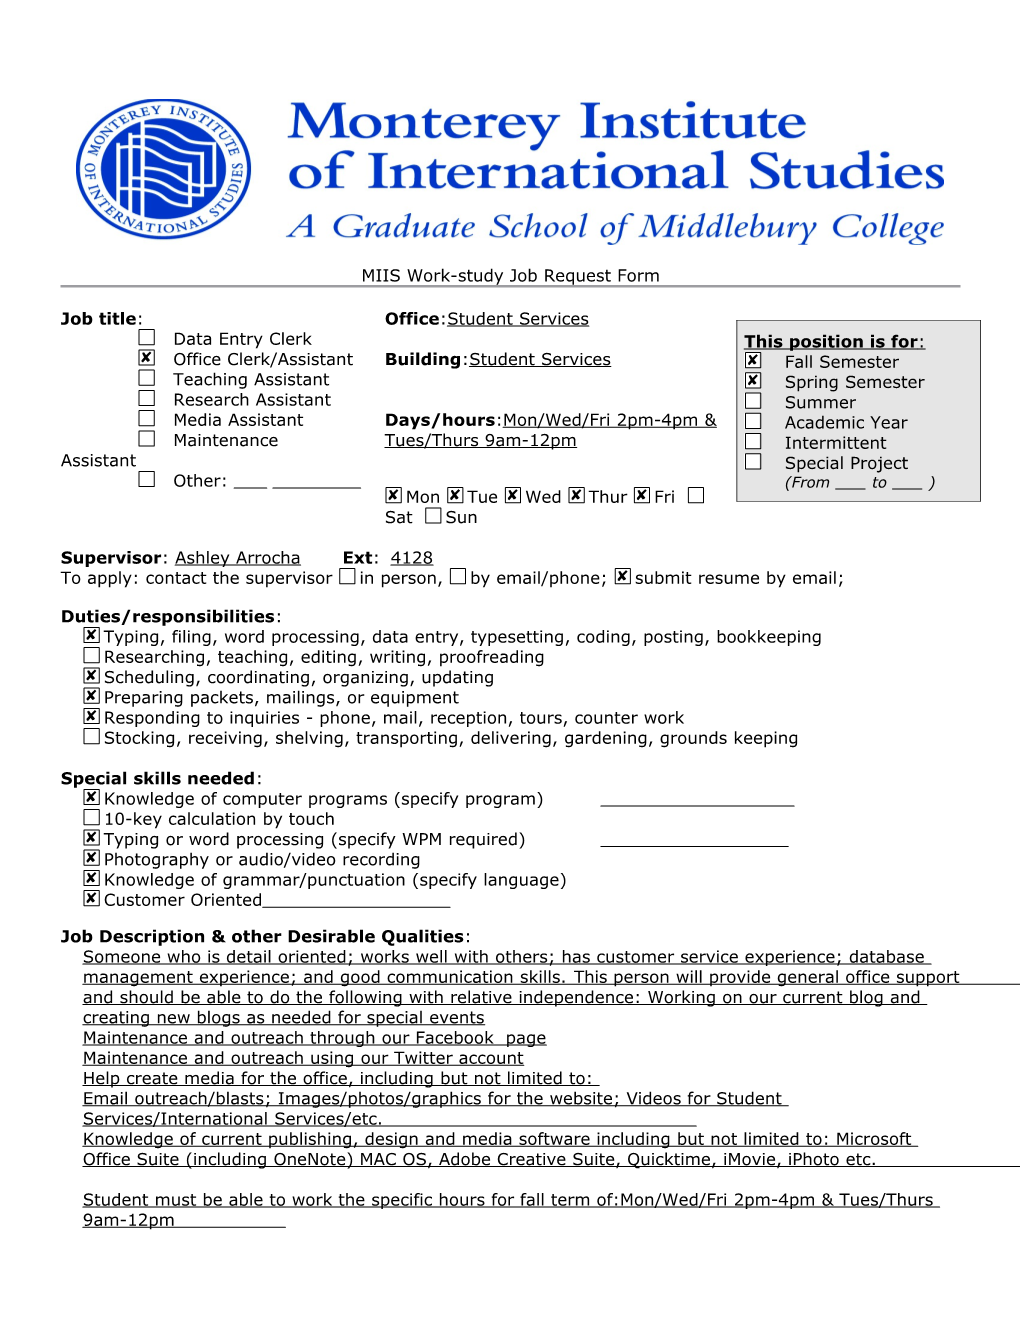 MIIS Work-Study Job Request Form